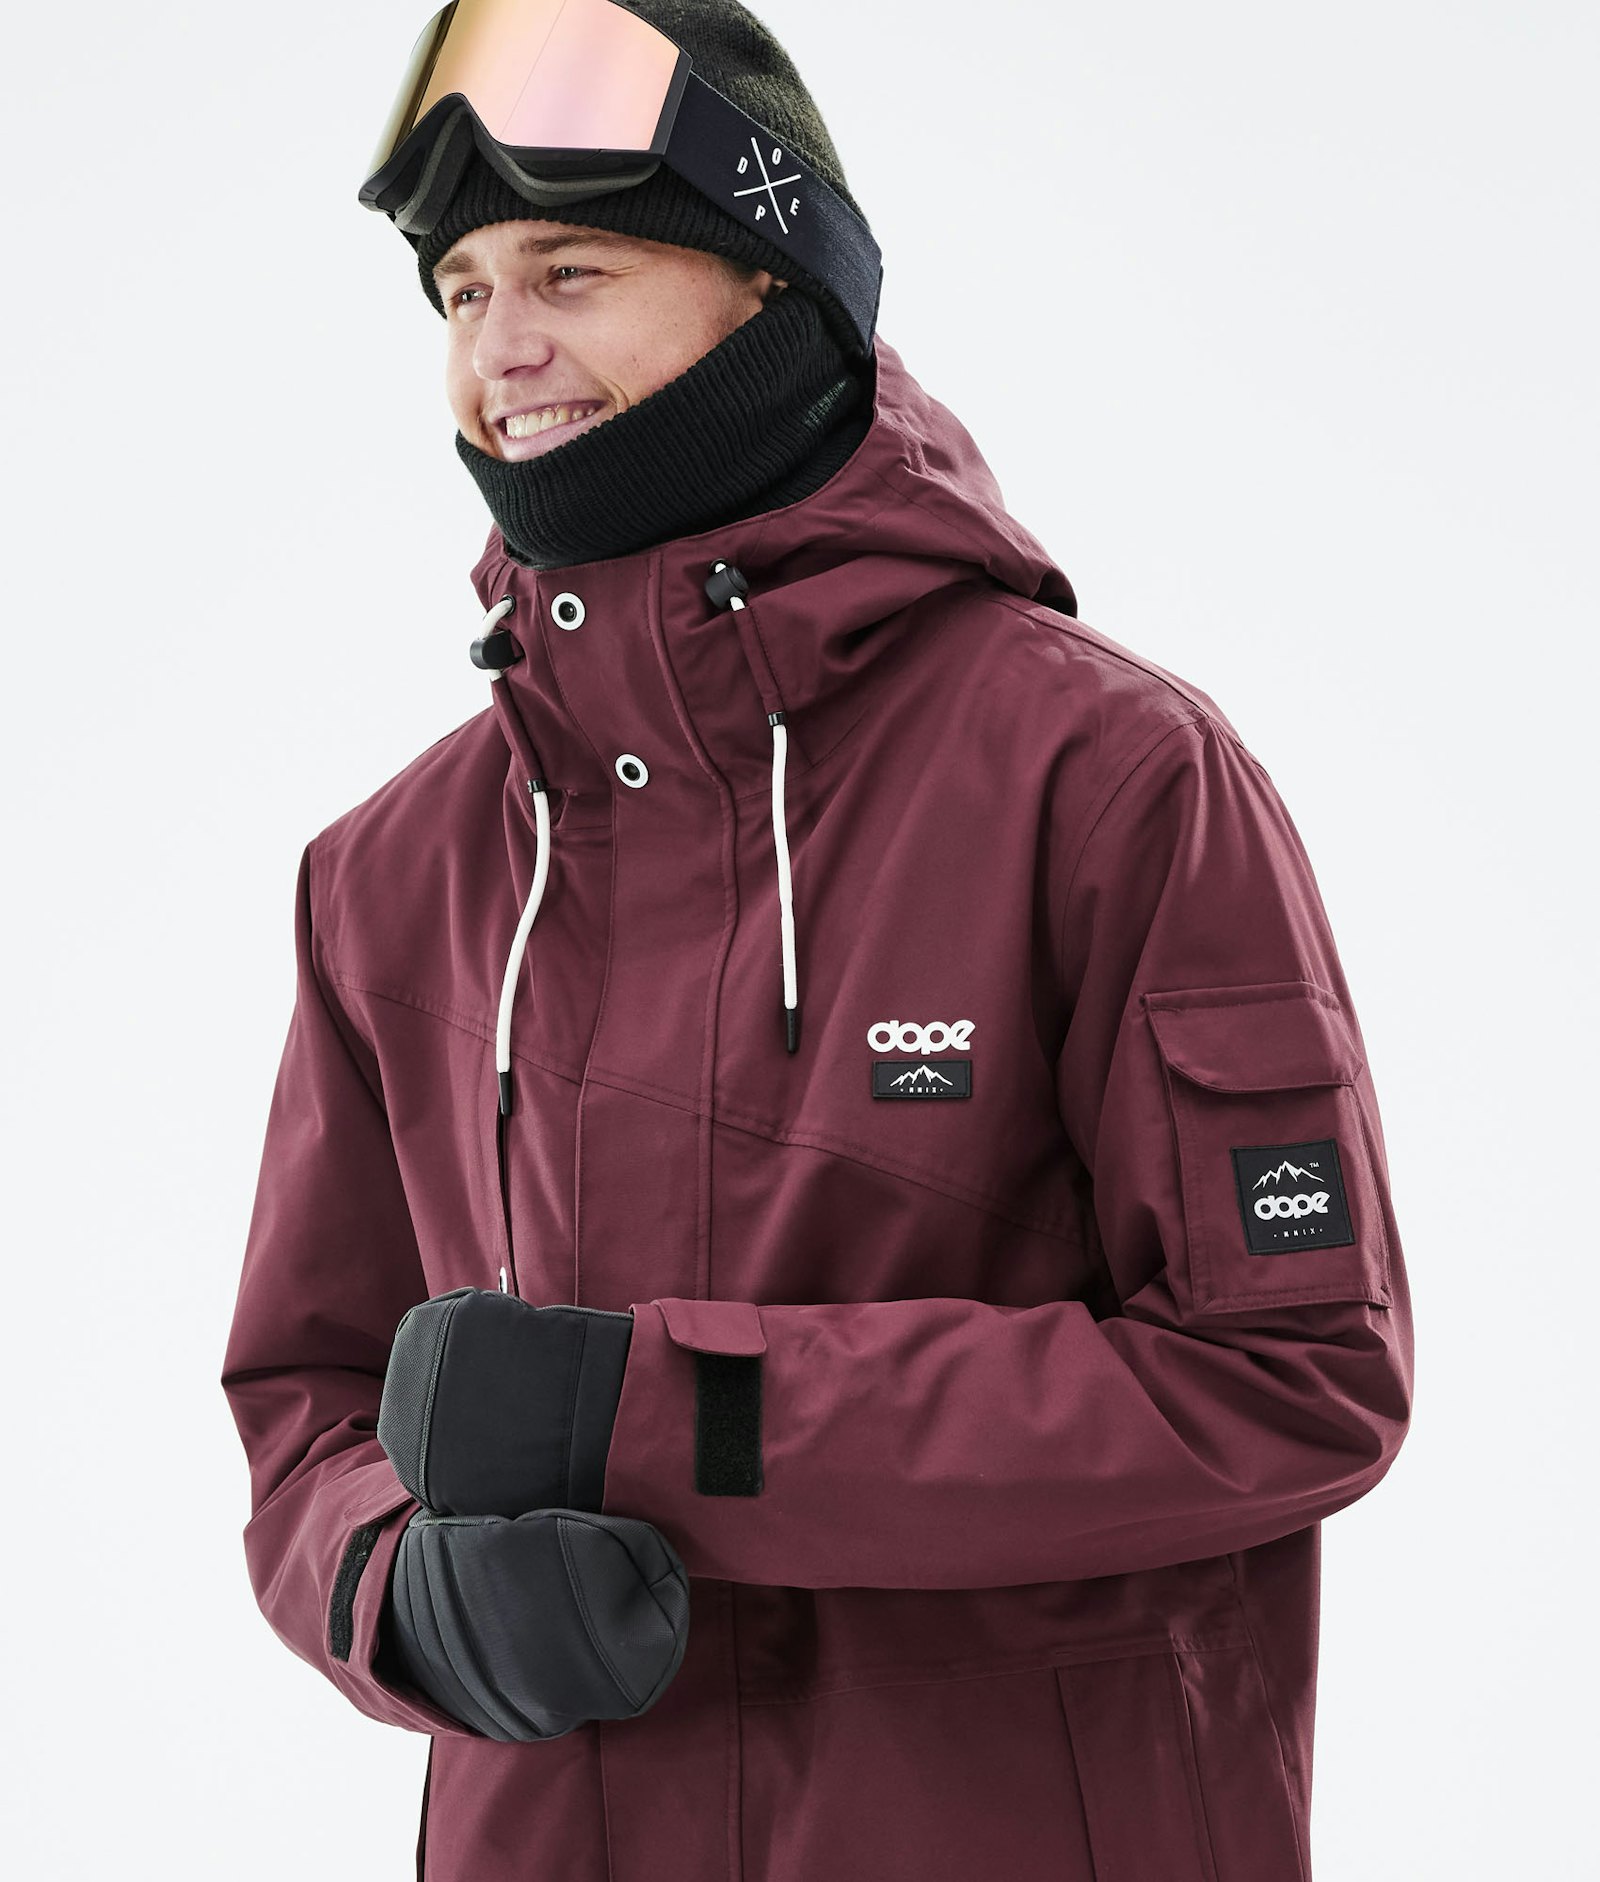 Adept 2019 Snowboard Jacket Men Burgundy